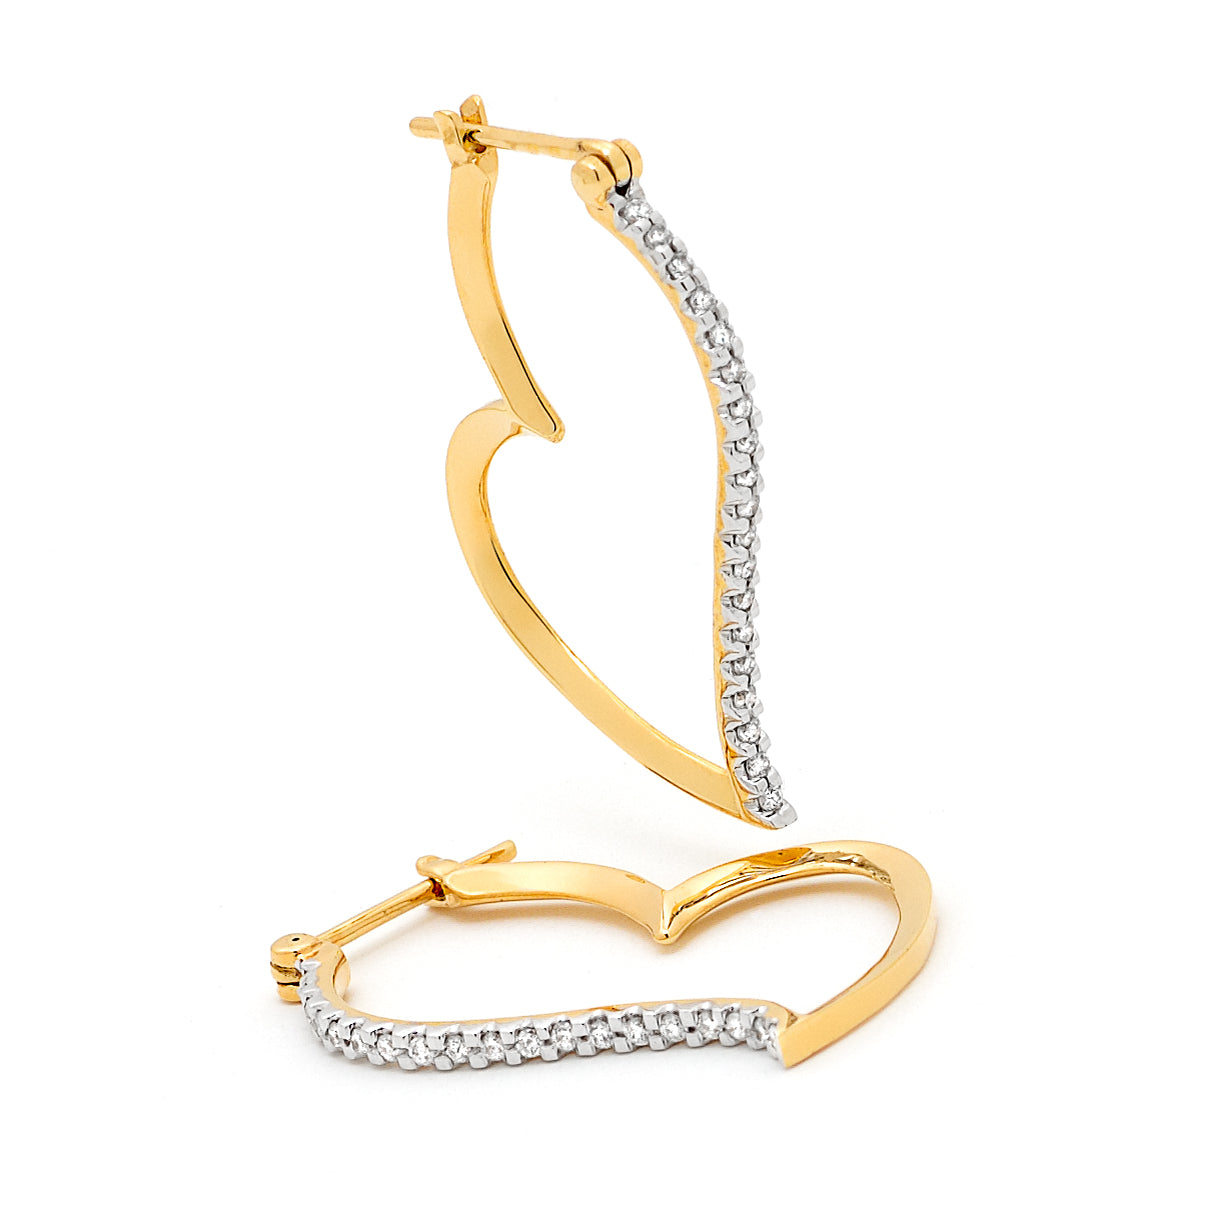 Heart shaped diamond hoop earrings